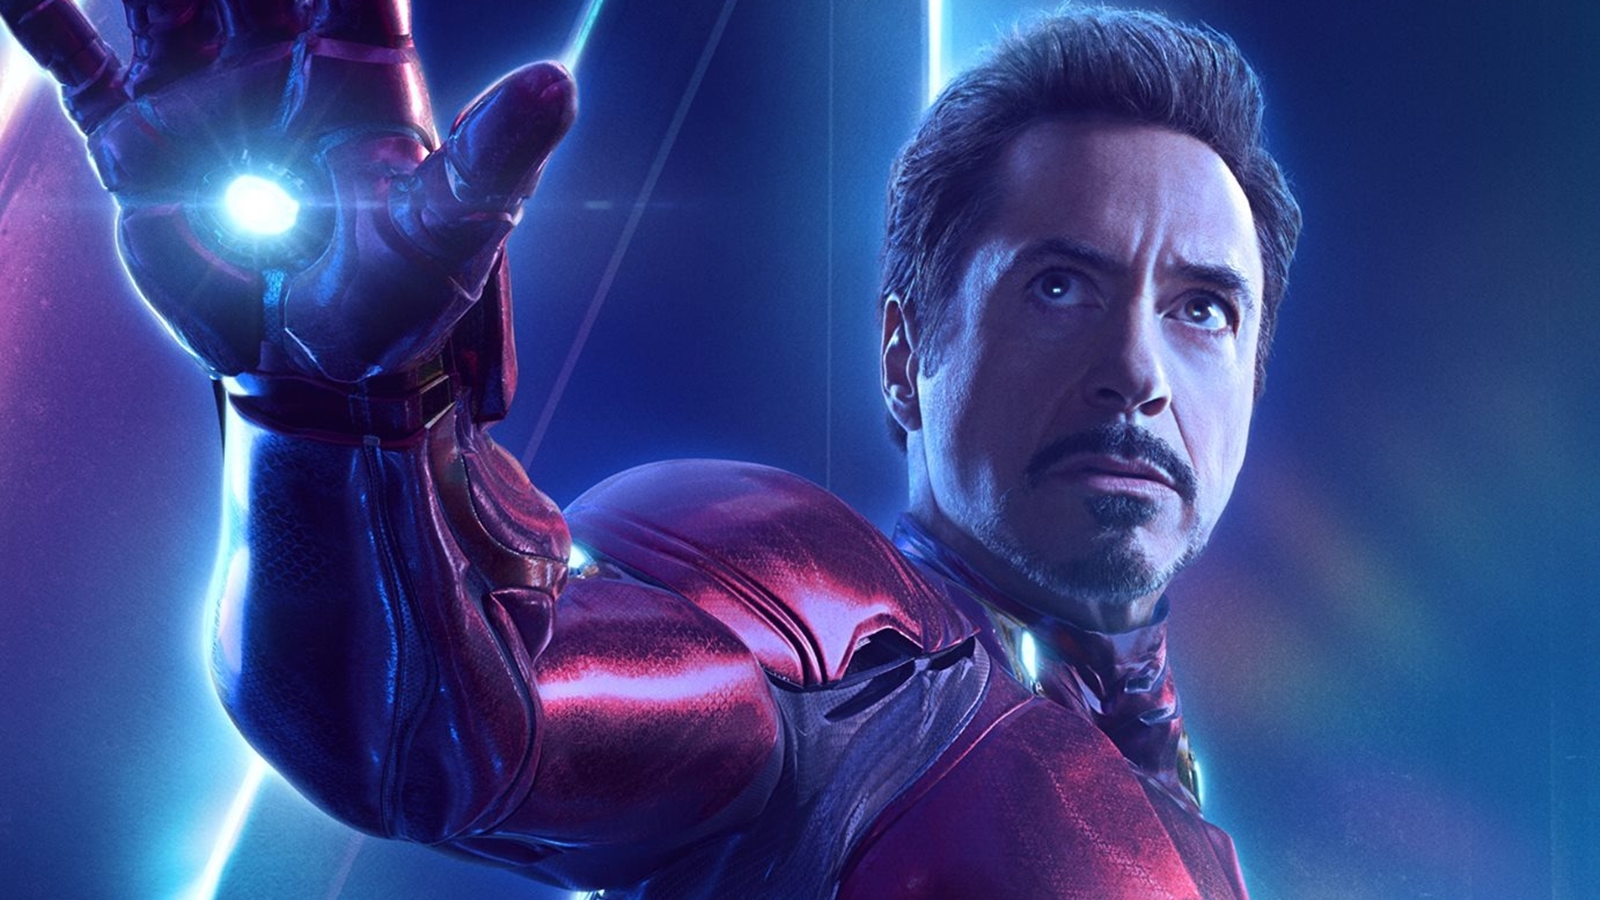 Robert Downey Jr's Iron Man will not return to MCU, says Marvel